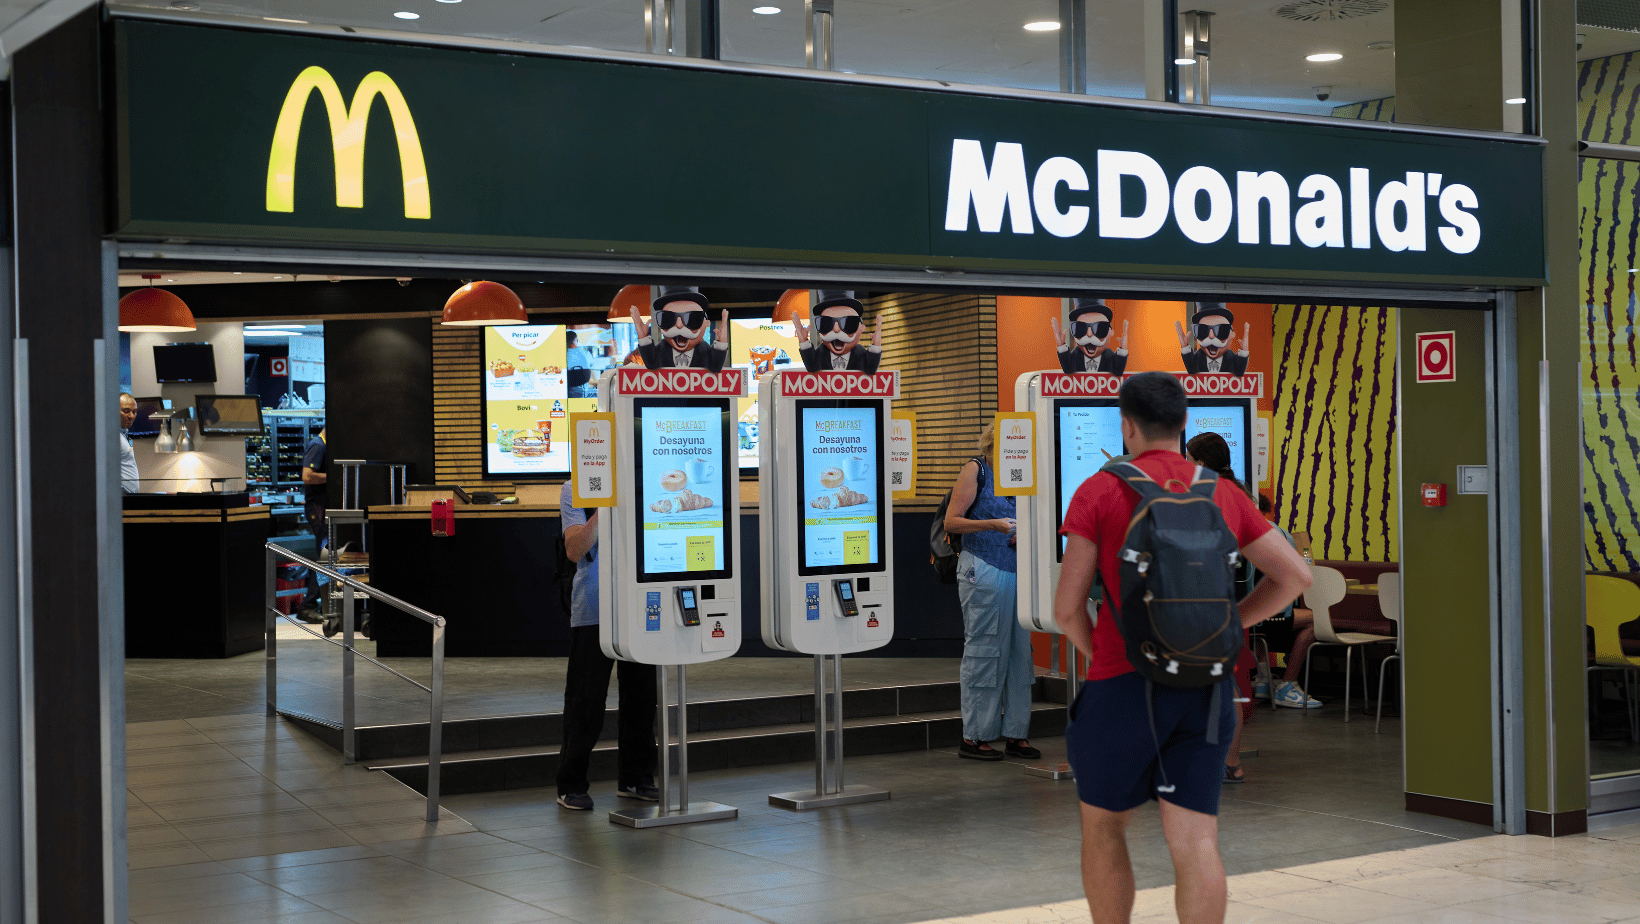 McDonald's entrance with self-serve kiosks to order